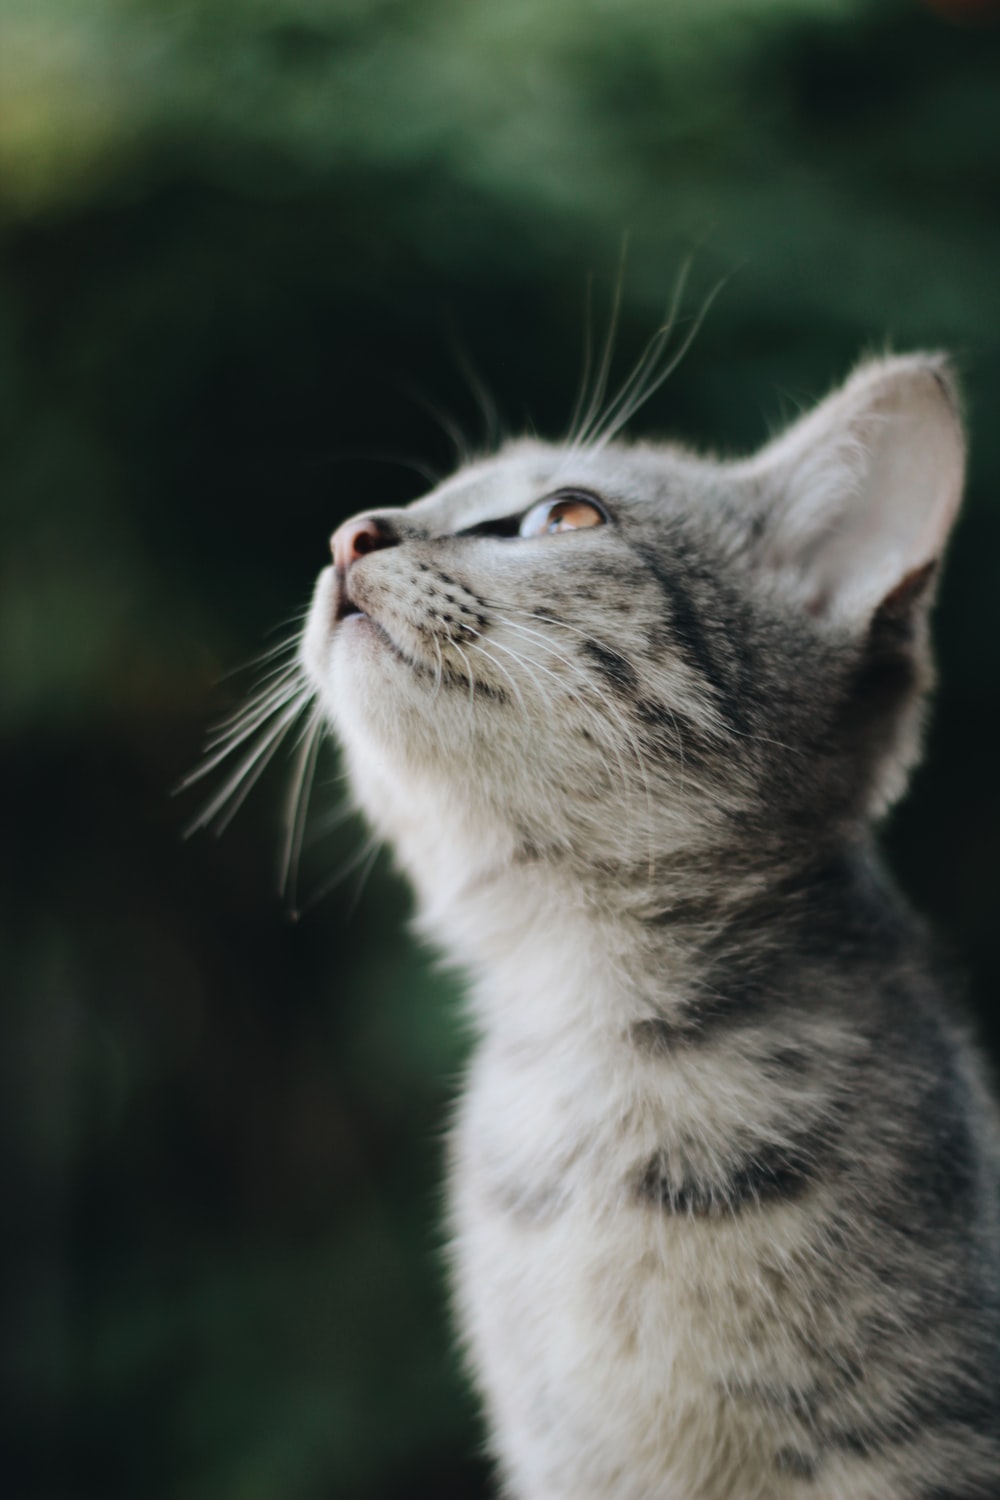 silver tabby cat photo